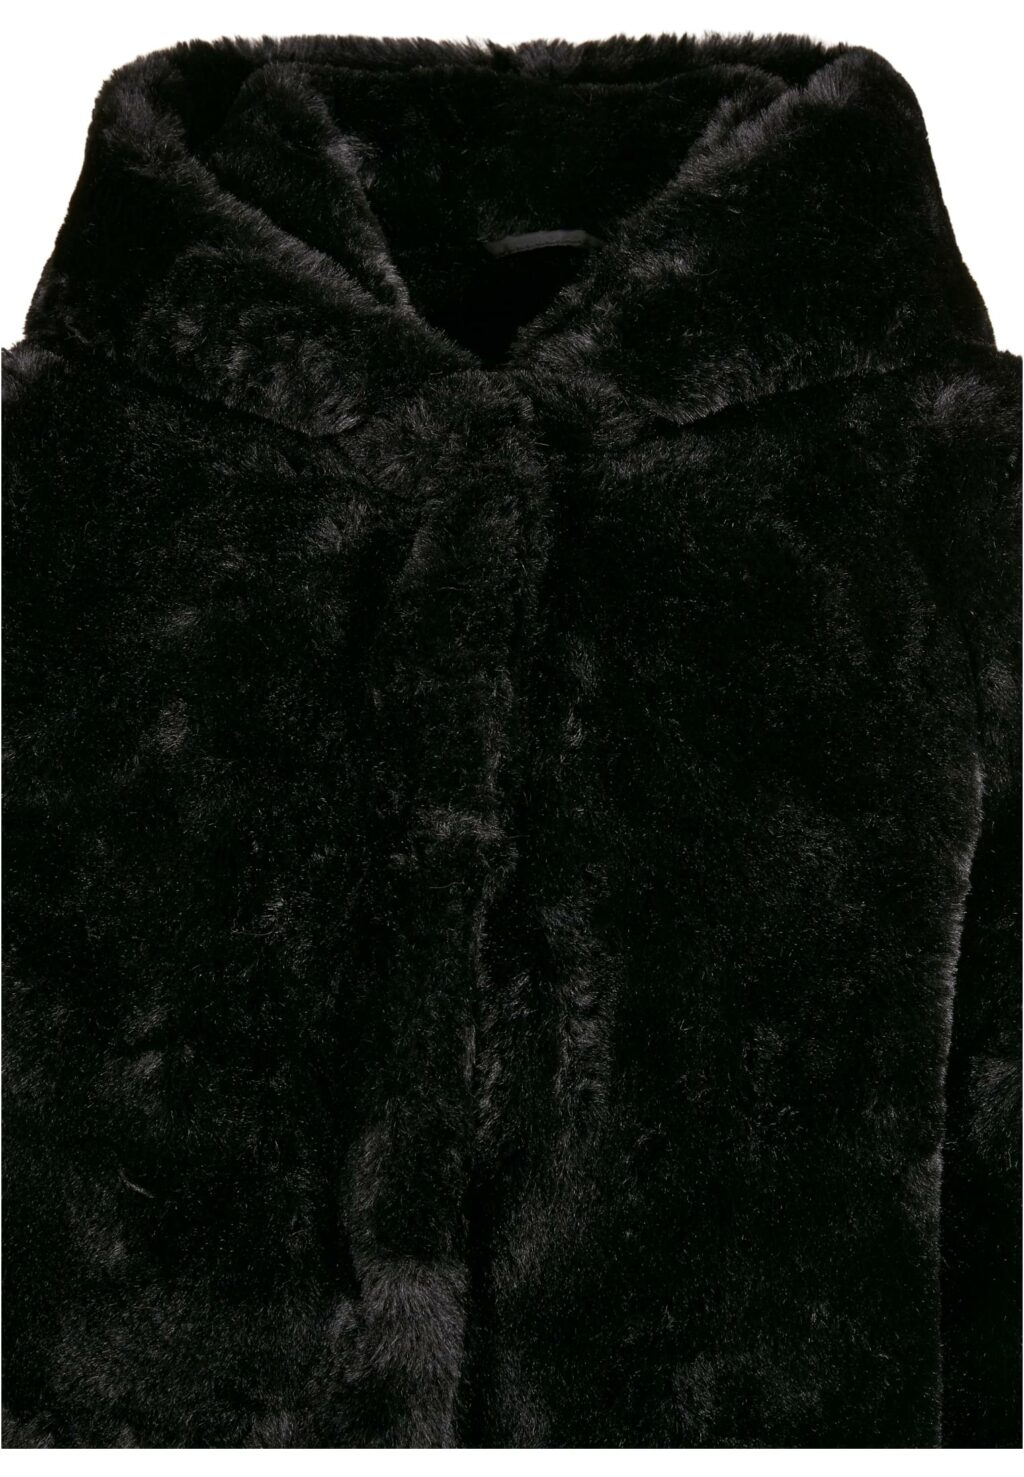 Girls Hooded Teddy Coat black UCK2375